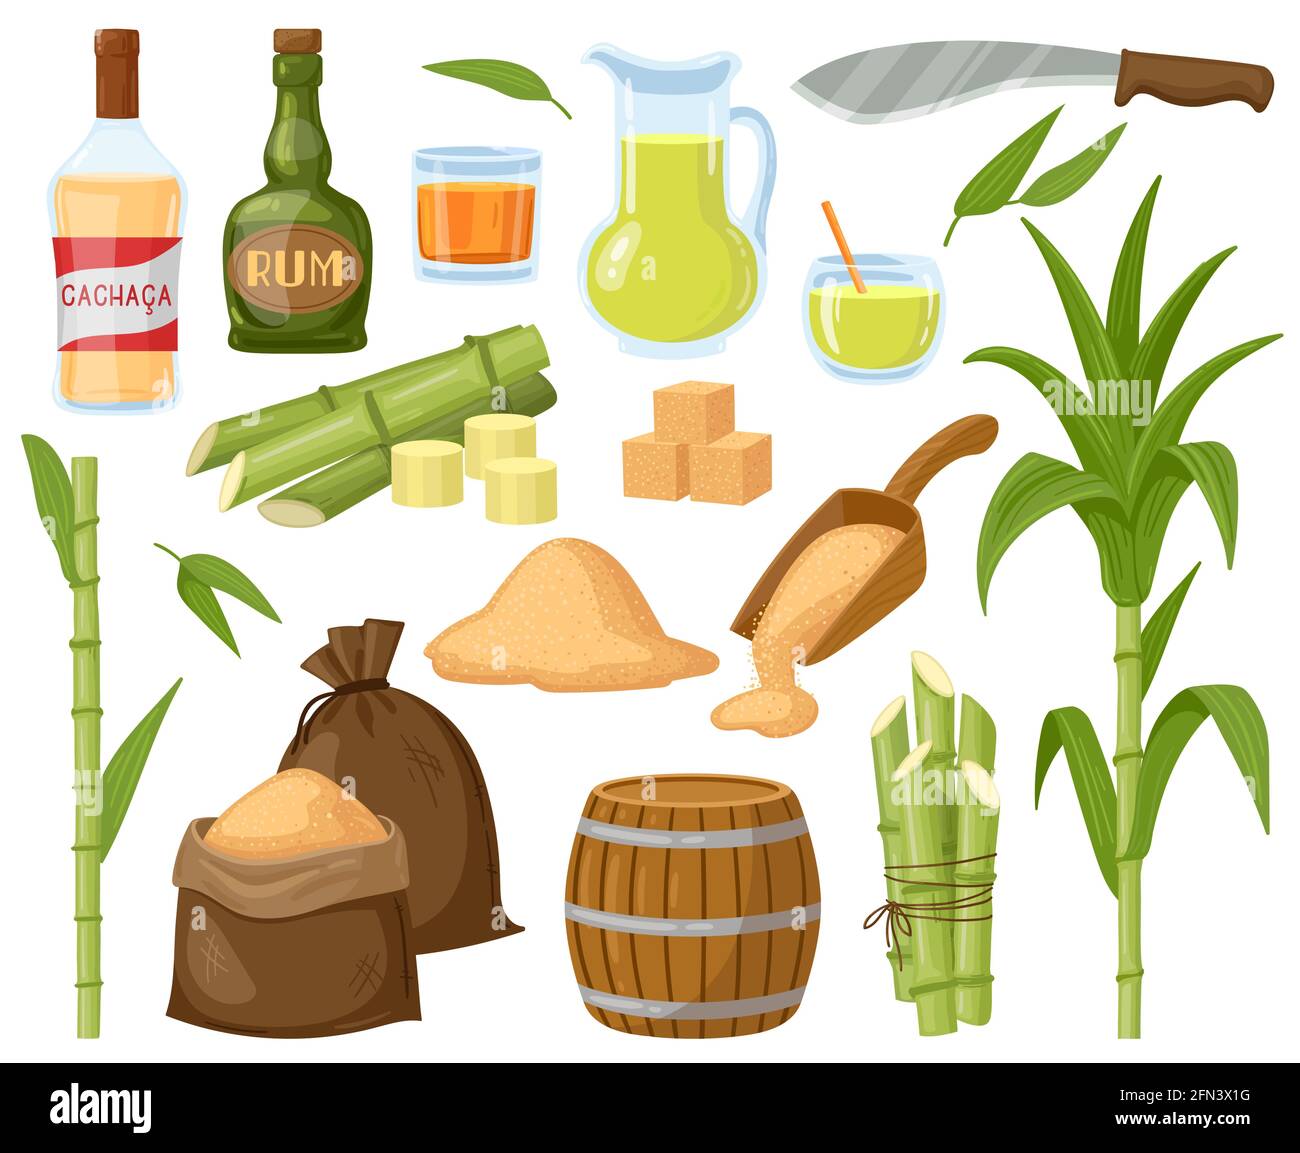 Caricatura caña de azúcar. Conjunto de ilustración de plantas de hoja de  caña de azúcar, cubos de azúcar, azúcar granulada y vector líquido  alcohólico de ron. Productos naturales de caña de azúcar